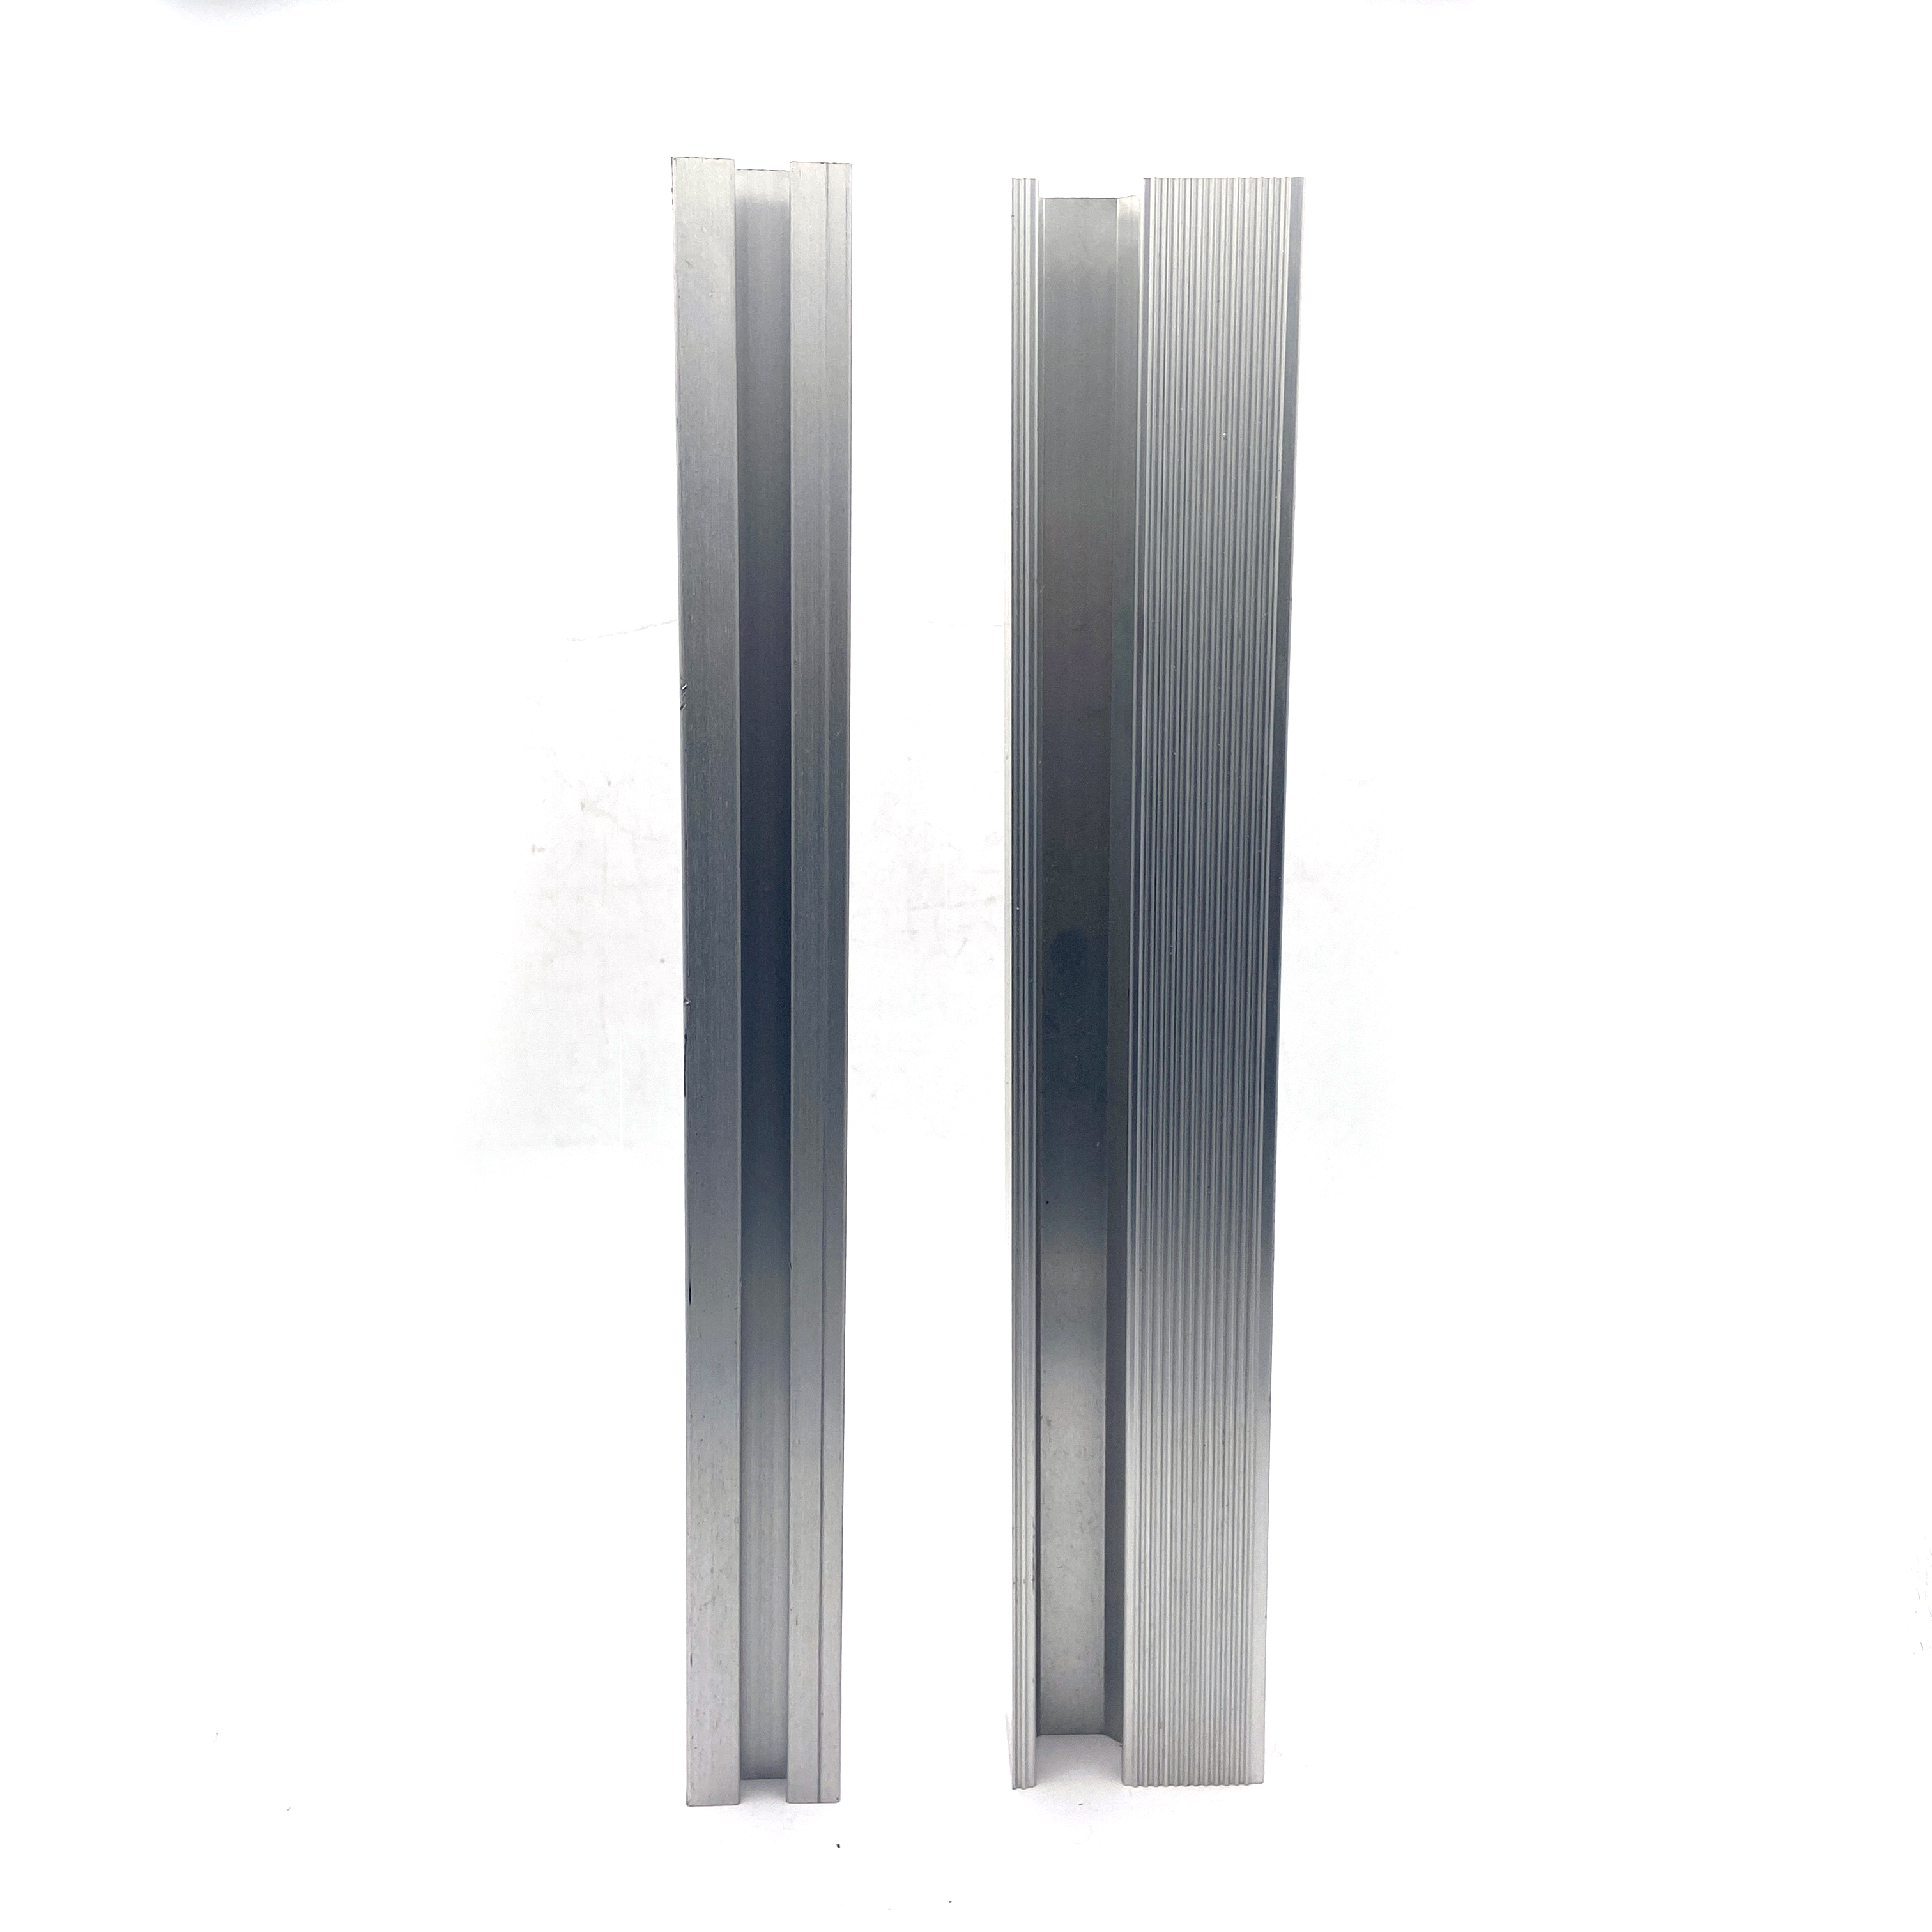 Anodized 6063 T5 Extruded Extrusion Aluminium Profiles Customized